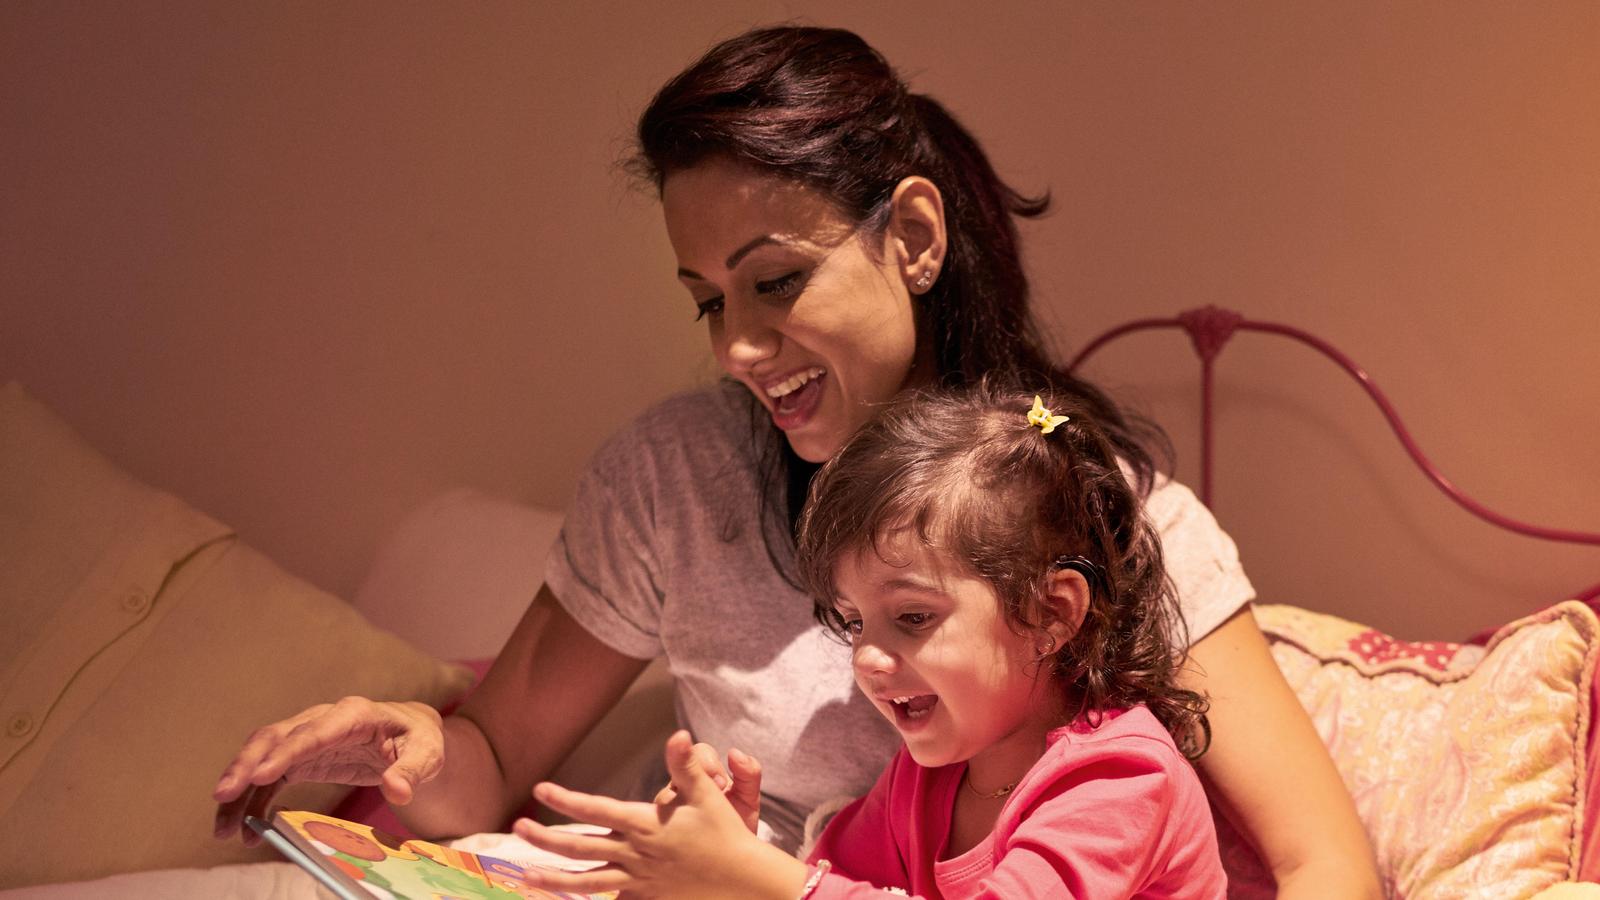 Un niño que usa un implante escucha a su madre leerle un libro